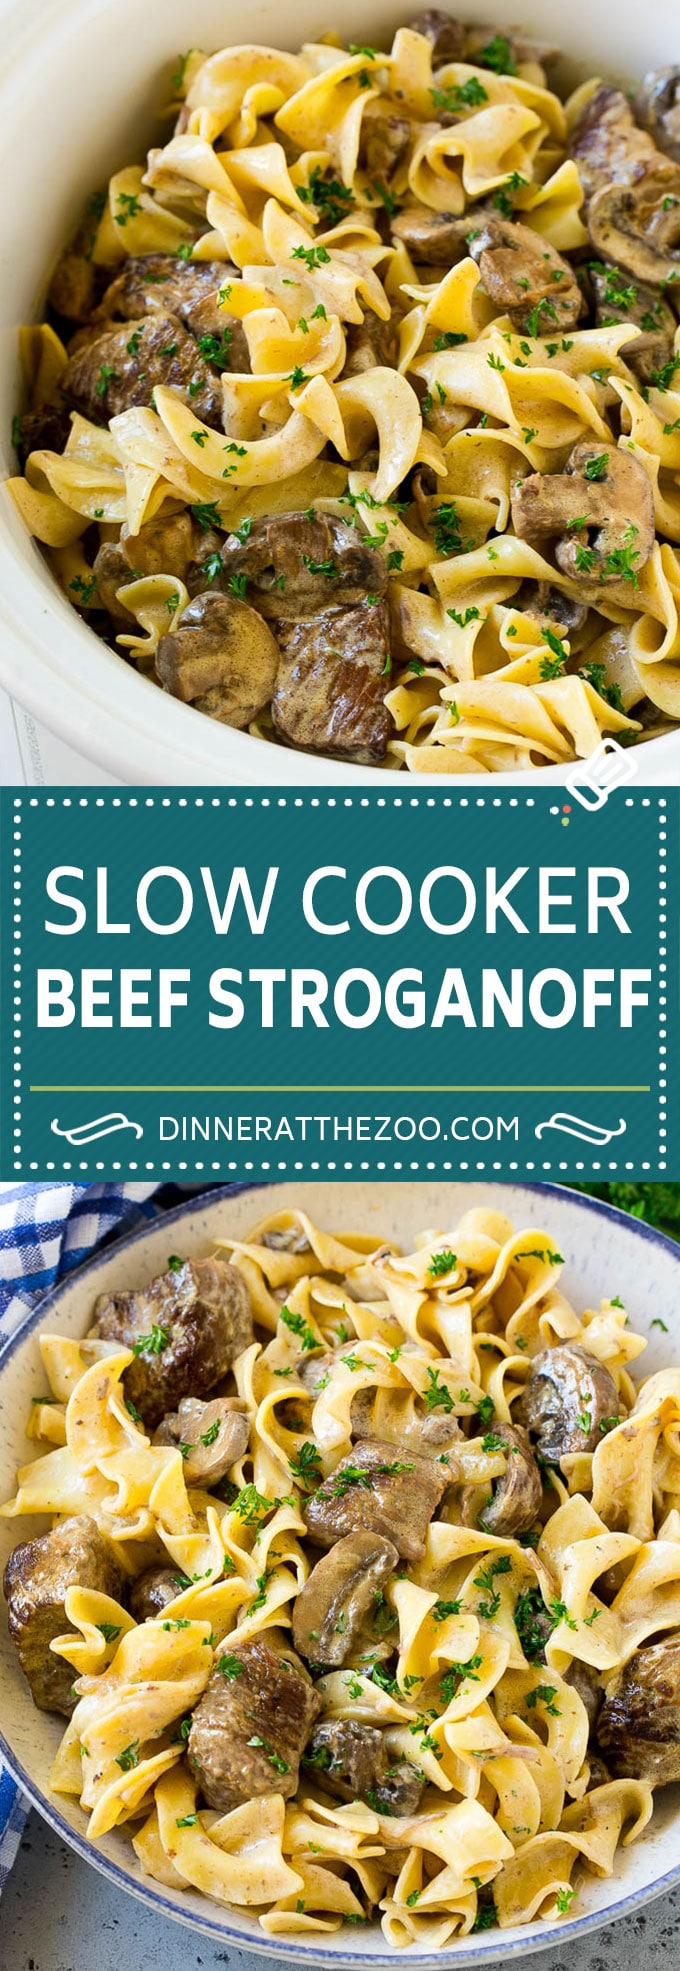 Slow Cooker Beef Stroganoff Recipe | Crock Pot Beef Stroganoff | Beef Recipe #slowcooker #crockpot #beef #mushrooms #pasta #dinner #dinneratthezoo